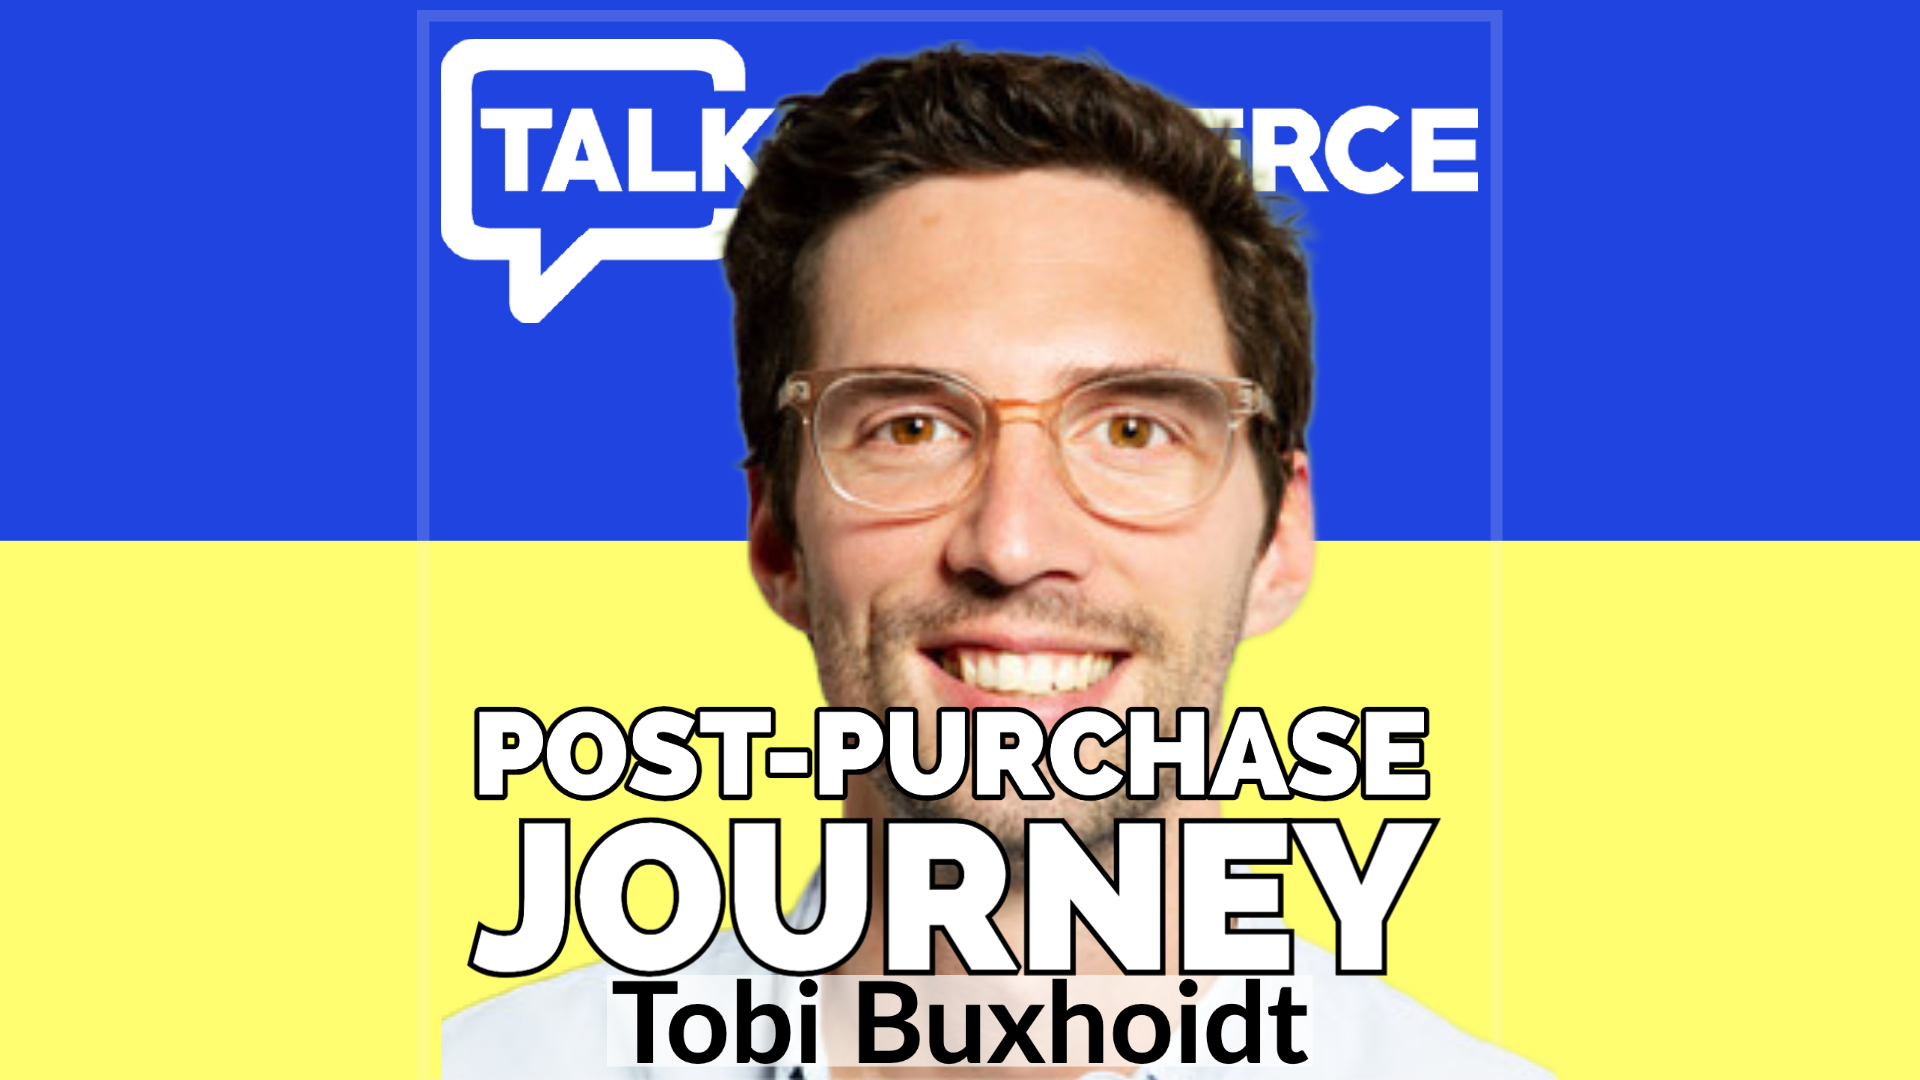 Talk-Commerce-Tobi Buxhoidt